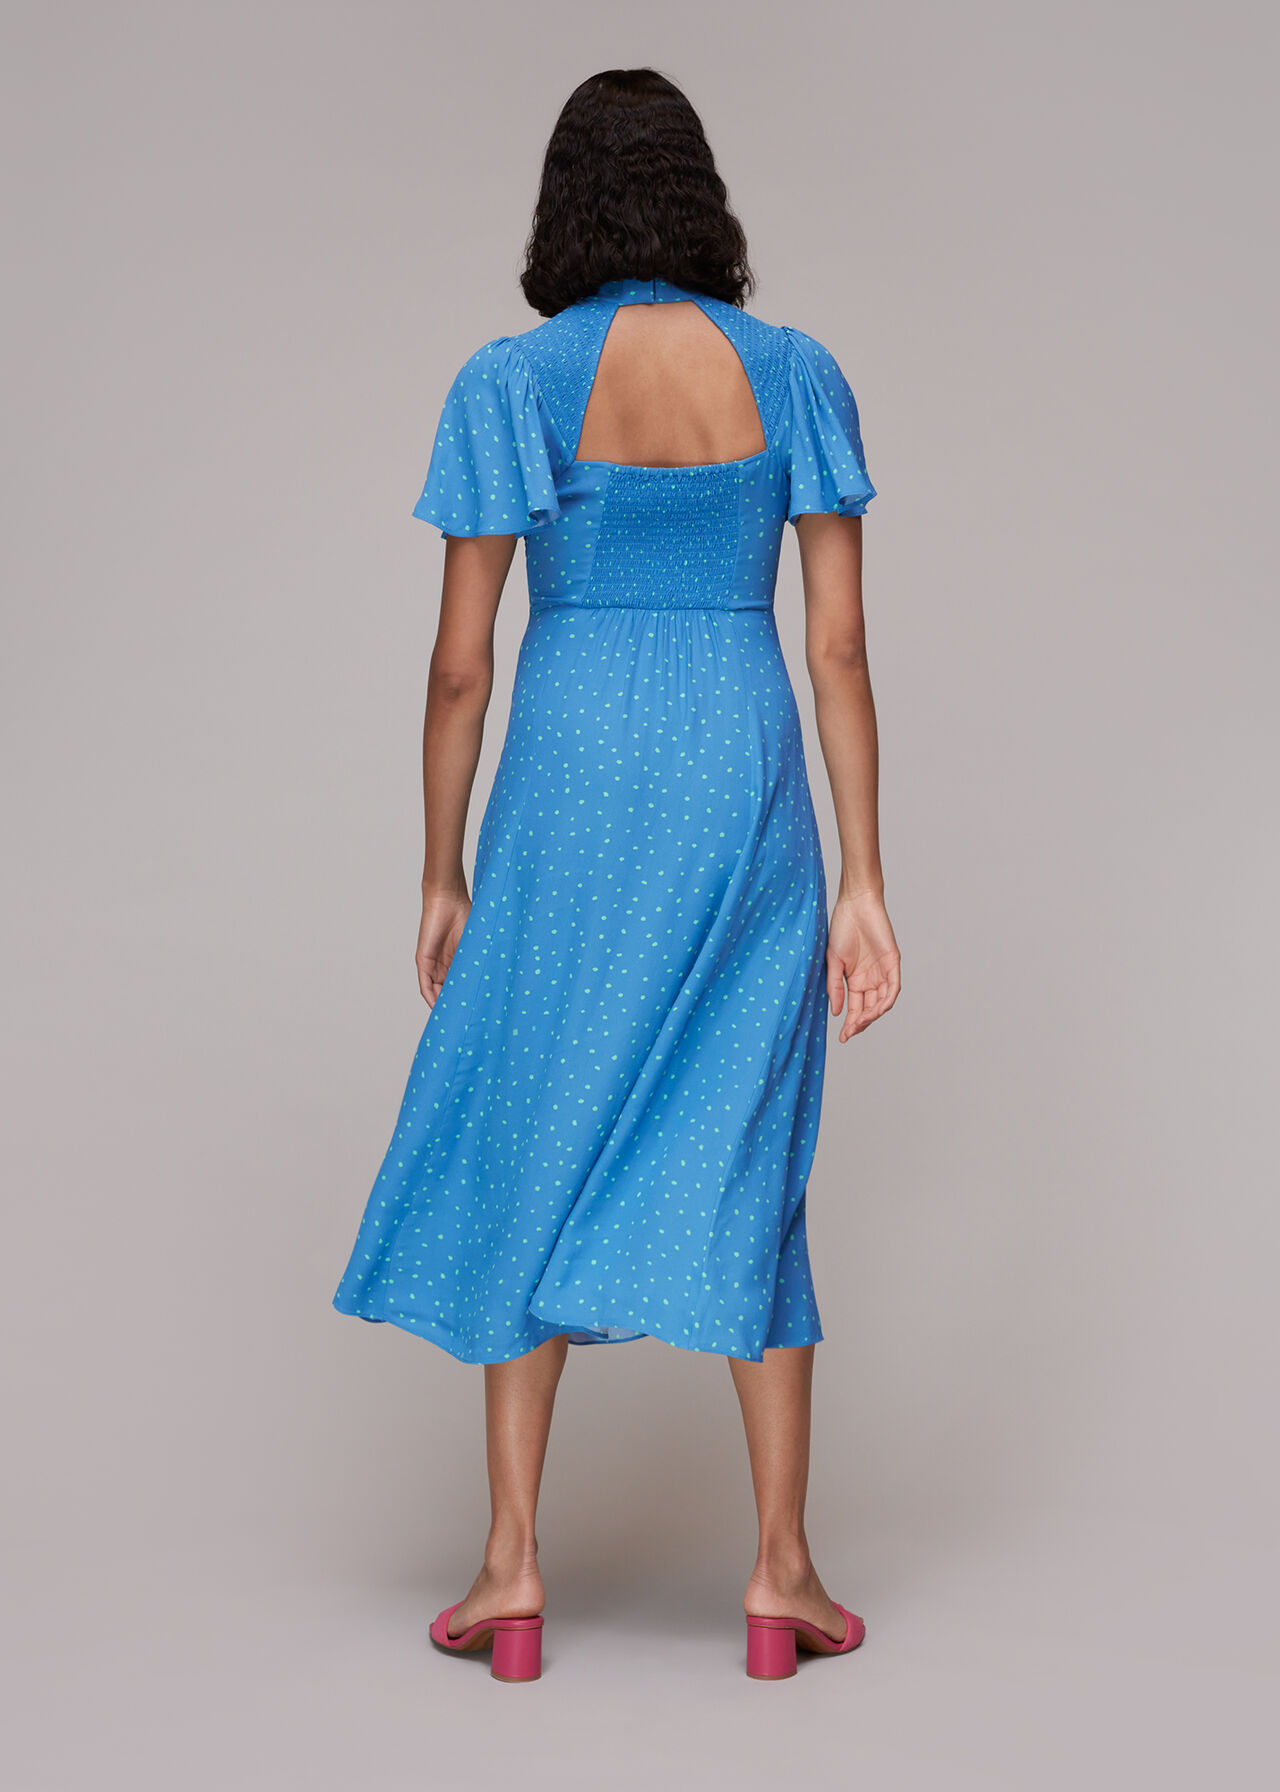 Uneven Spot Print Midi Dress